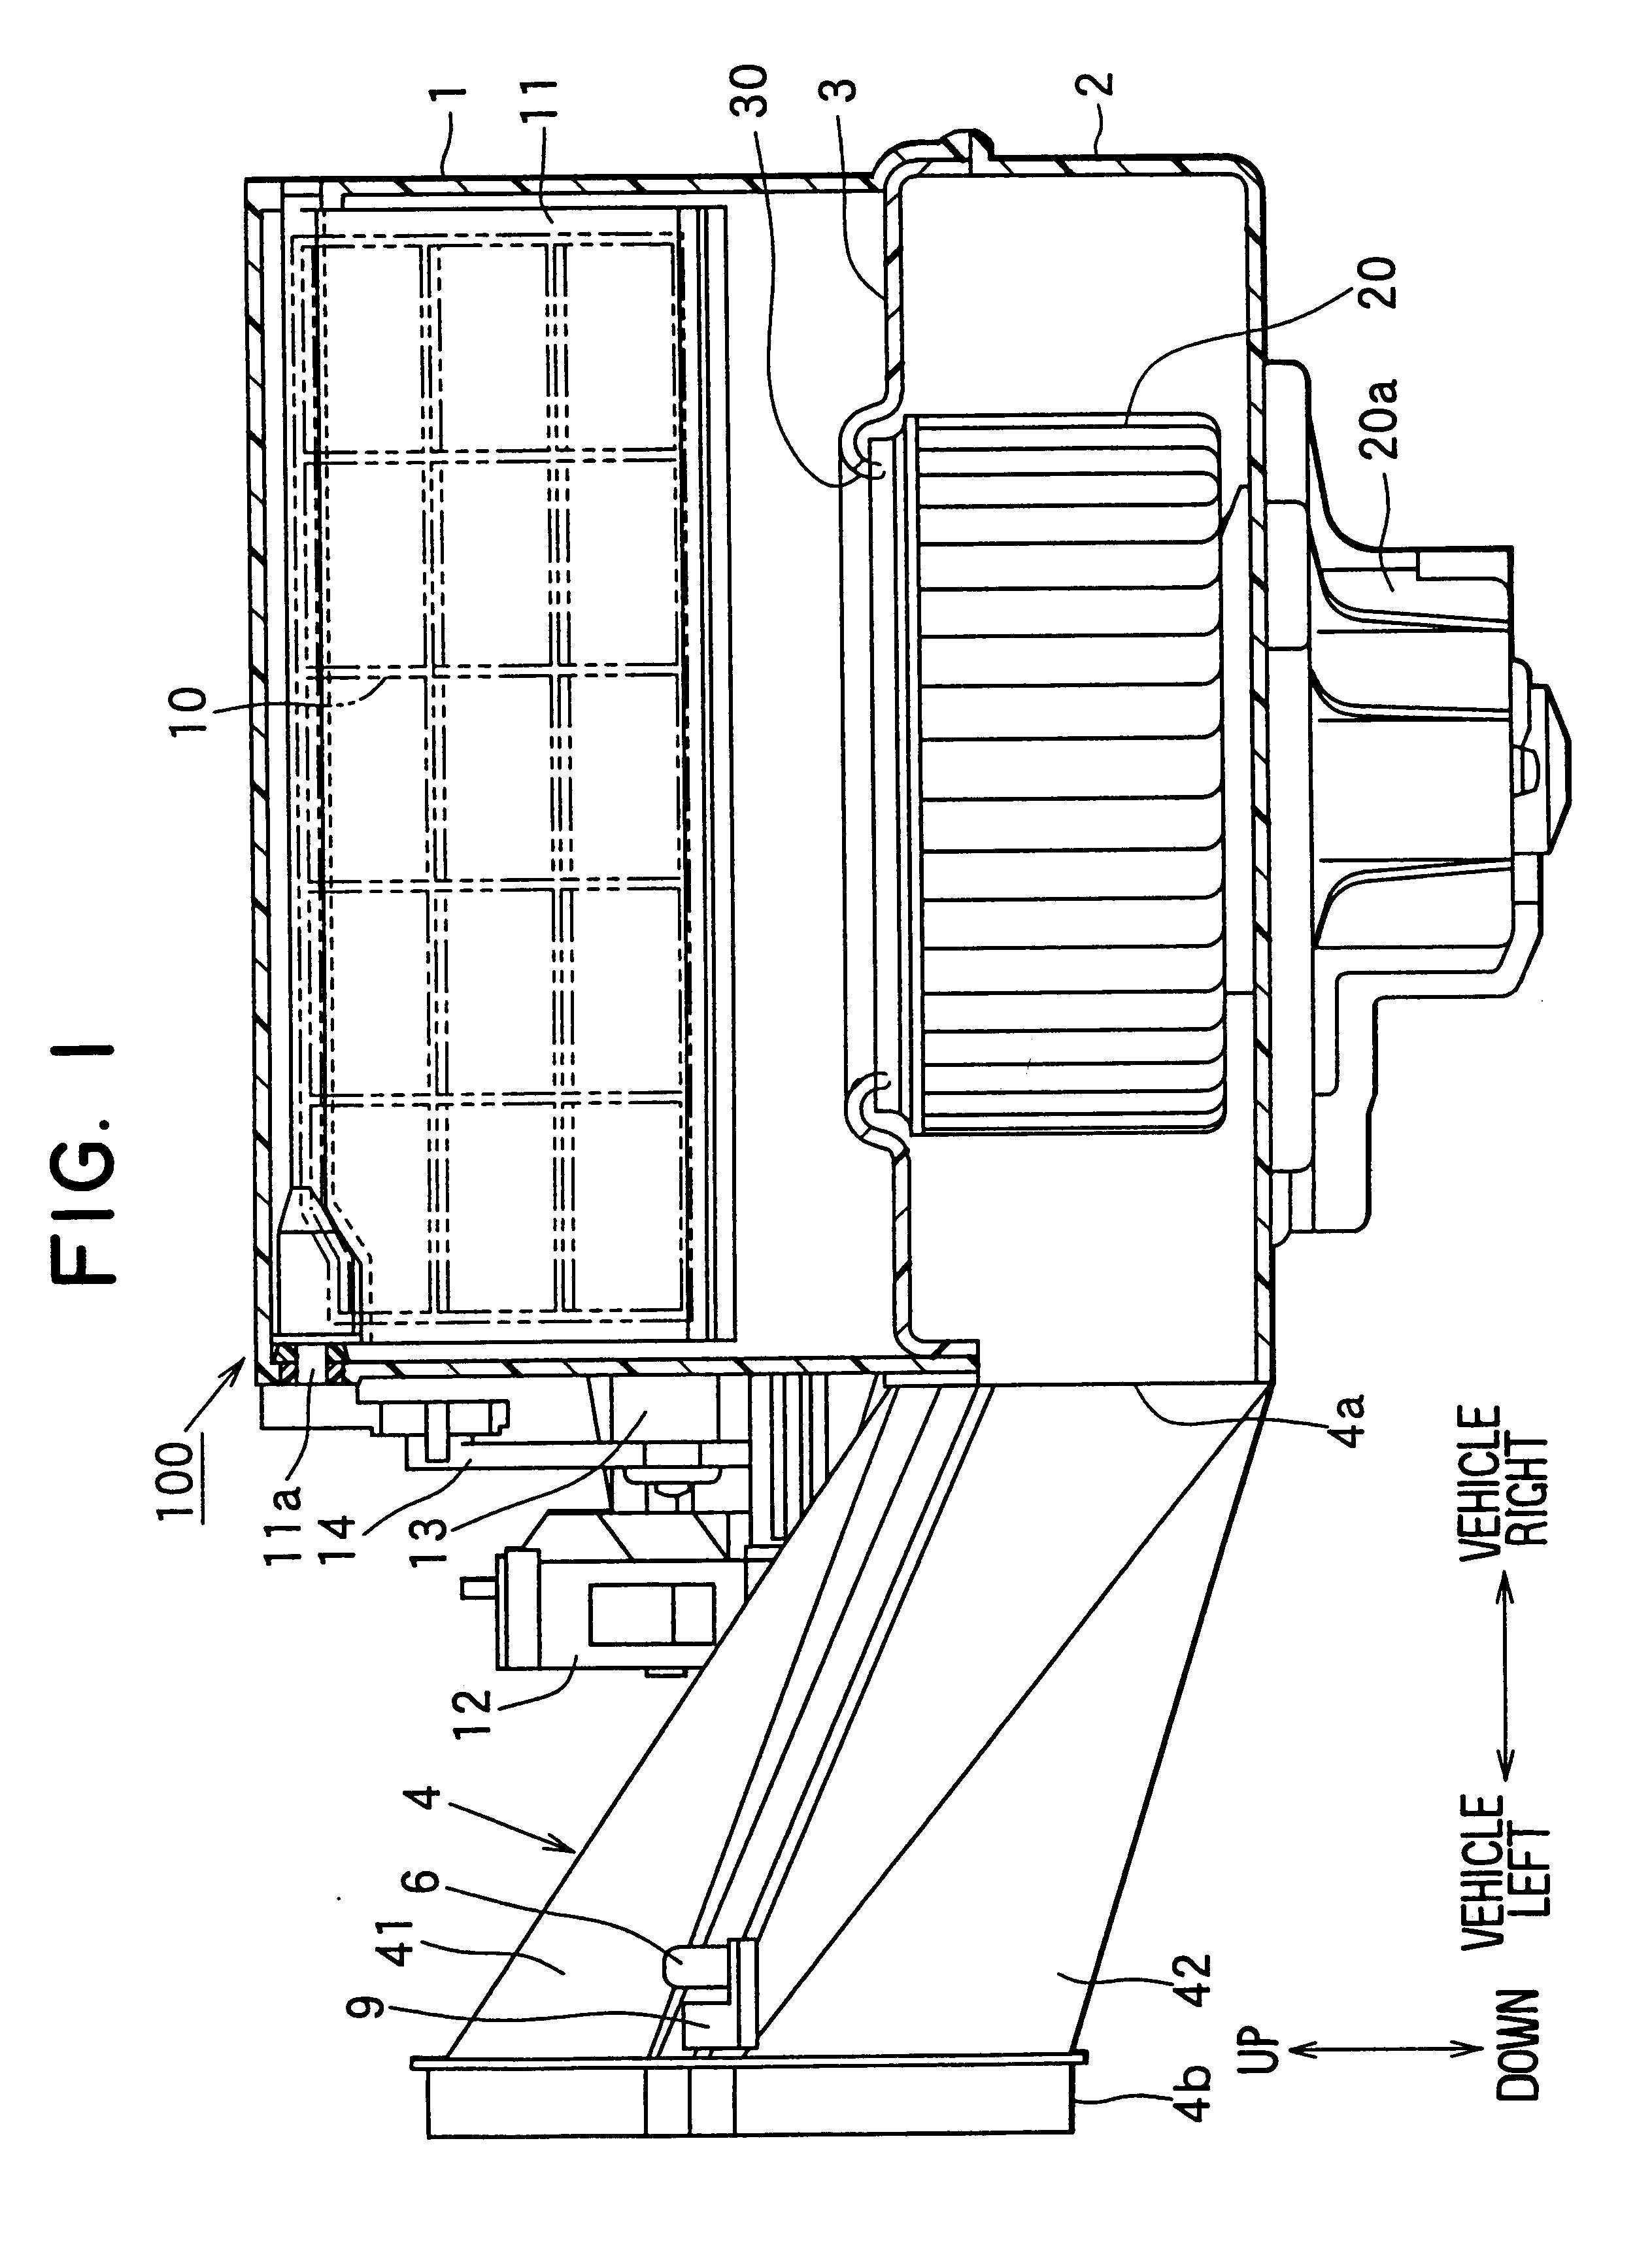 Case assembling structure of blower unit